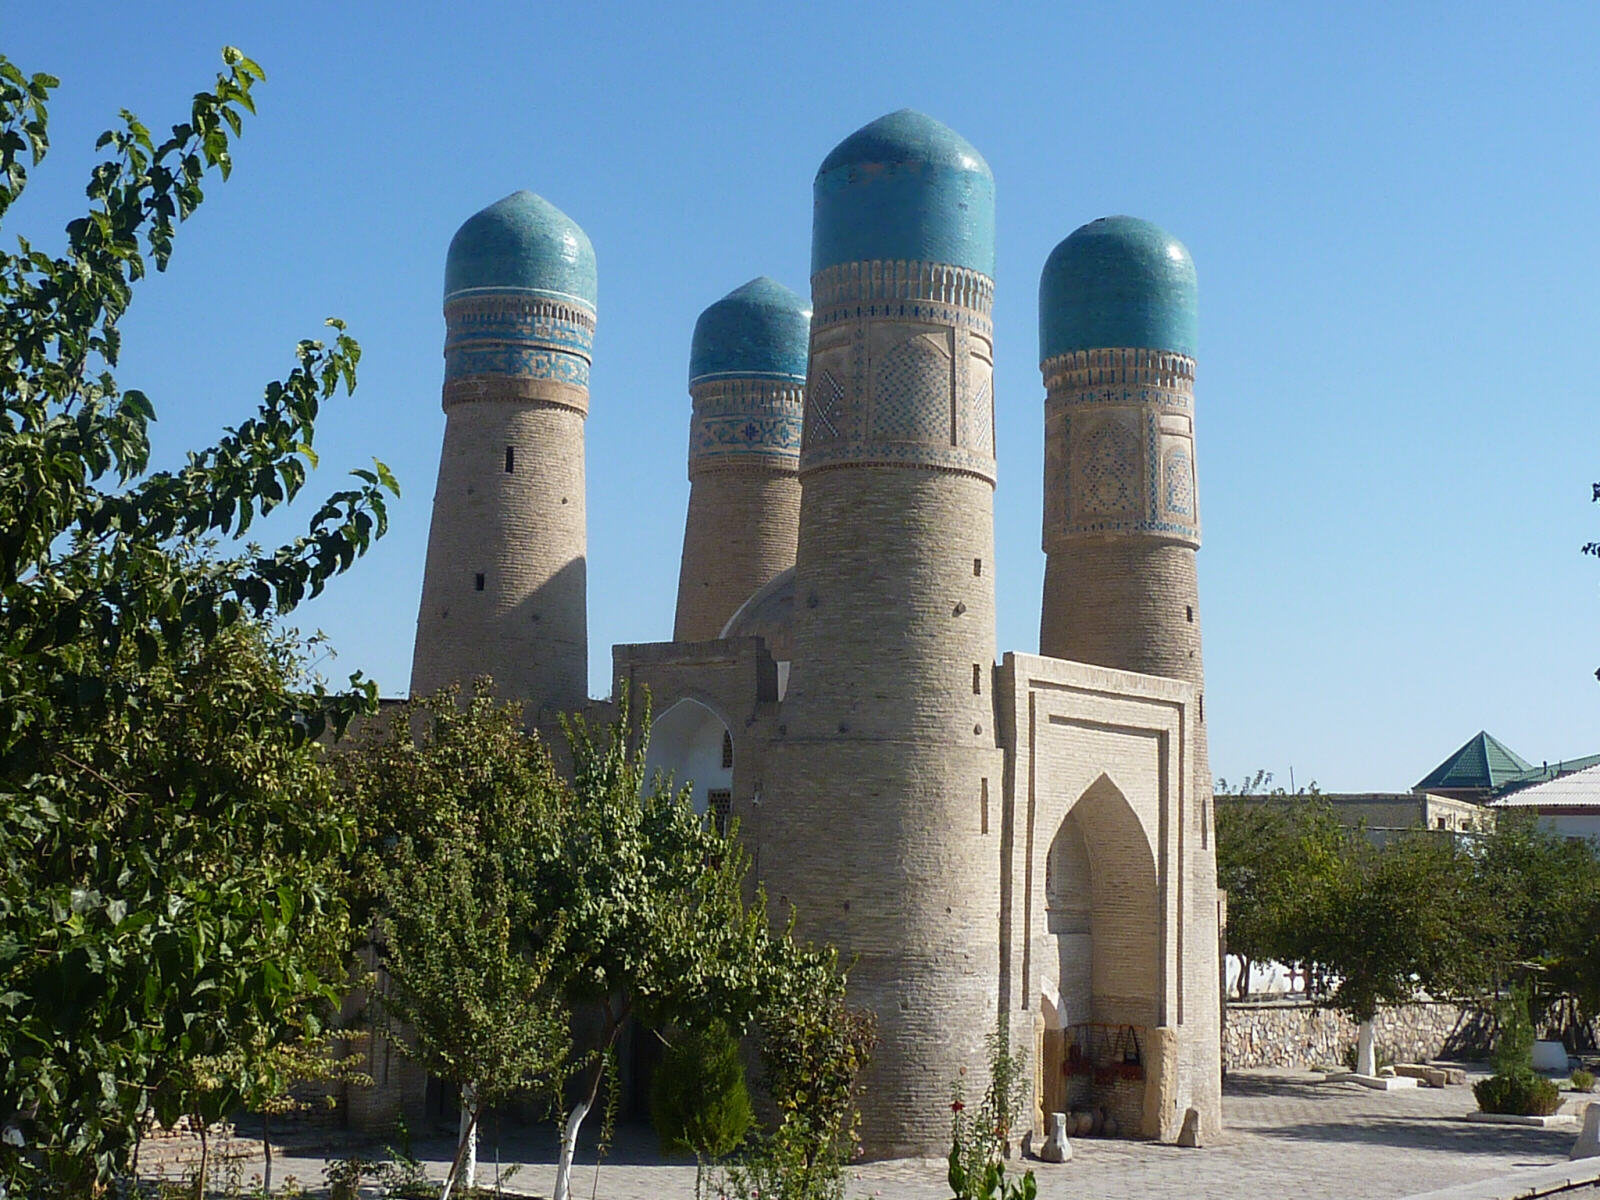 The Char Minar ('four minarets') in Bukhara, Uzbekistan